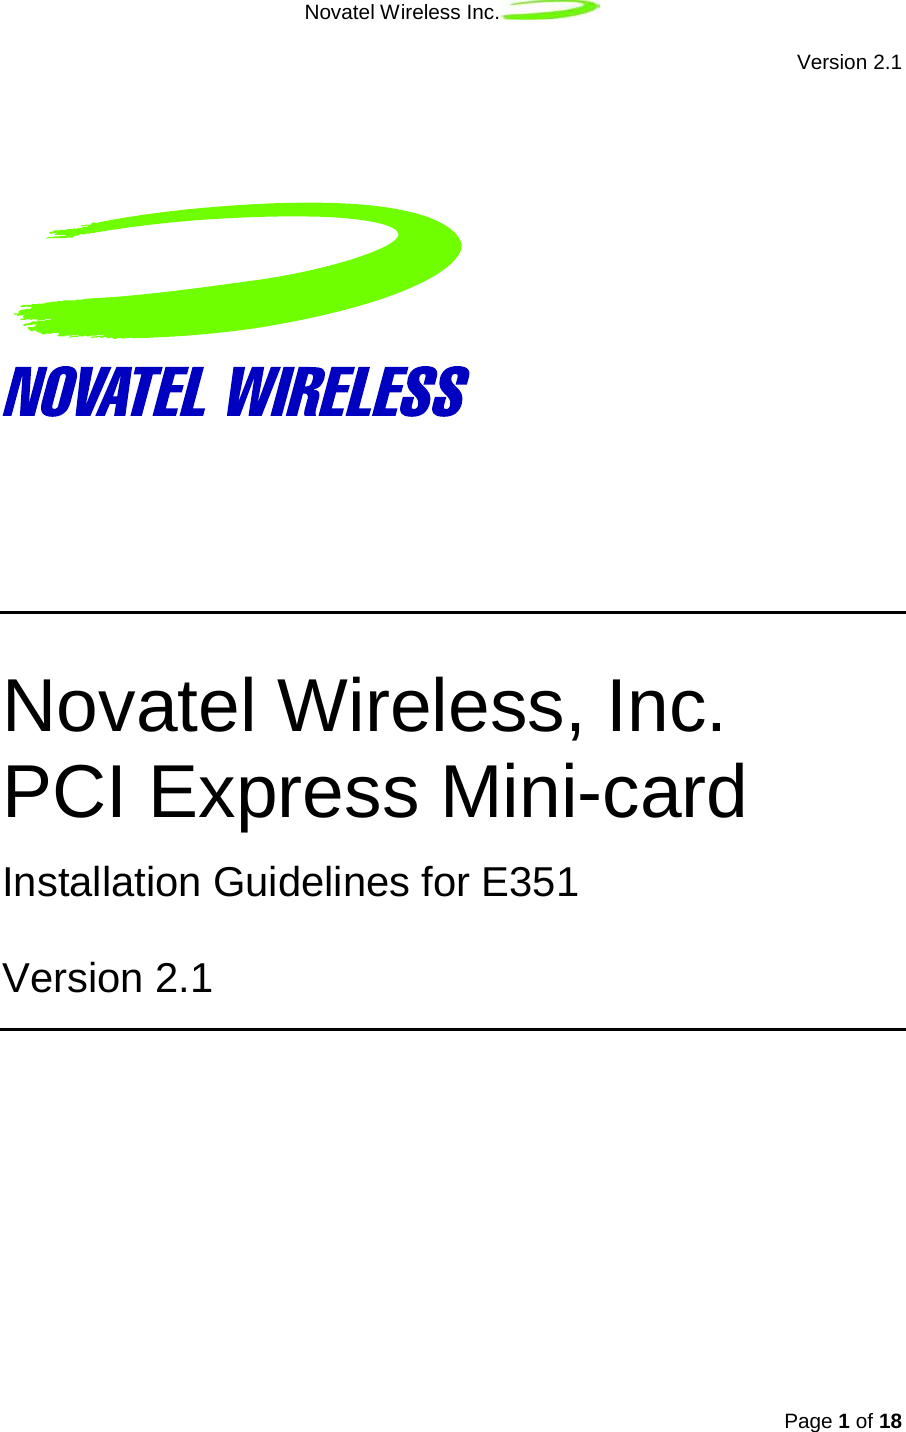 Novatel Wireless Inc.   Version 2.1   Page 1 of 18                Novatel Wireless, Inc. PCI Express Mini-card  Installation Guidelines for E351  Version 2.1    